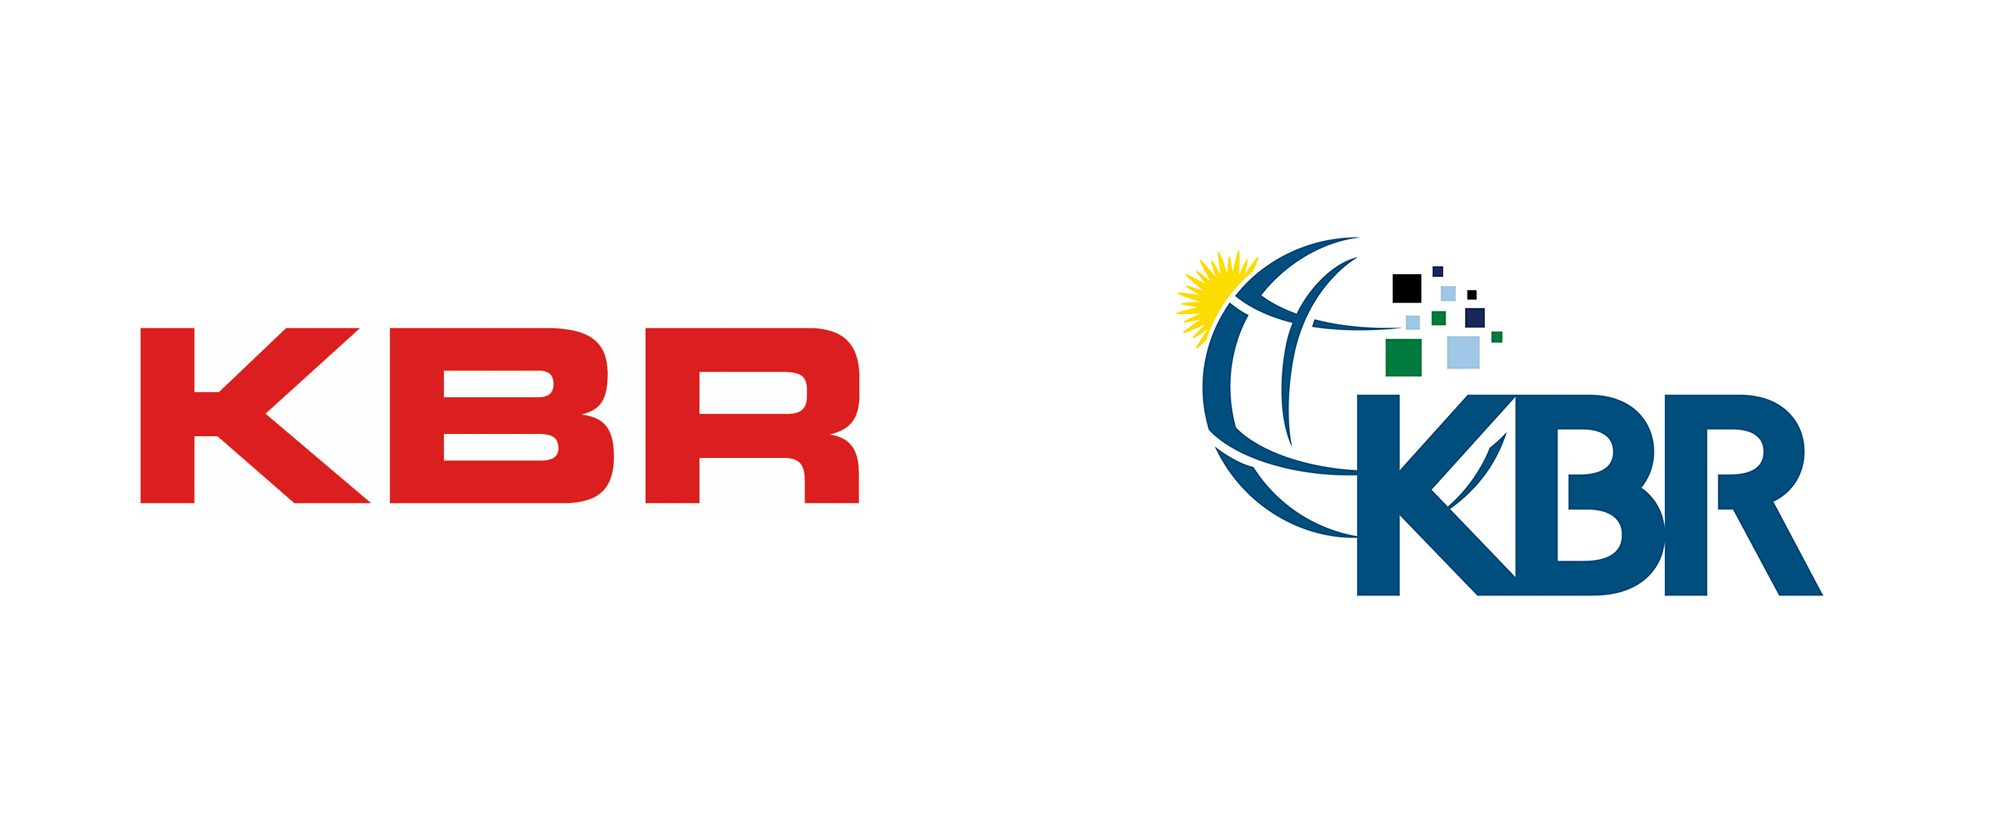 KBR Logo - Brand New: New Logo For KBR Done In House